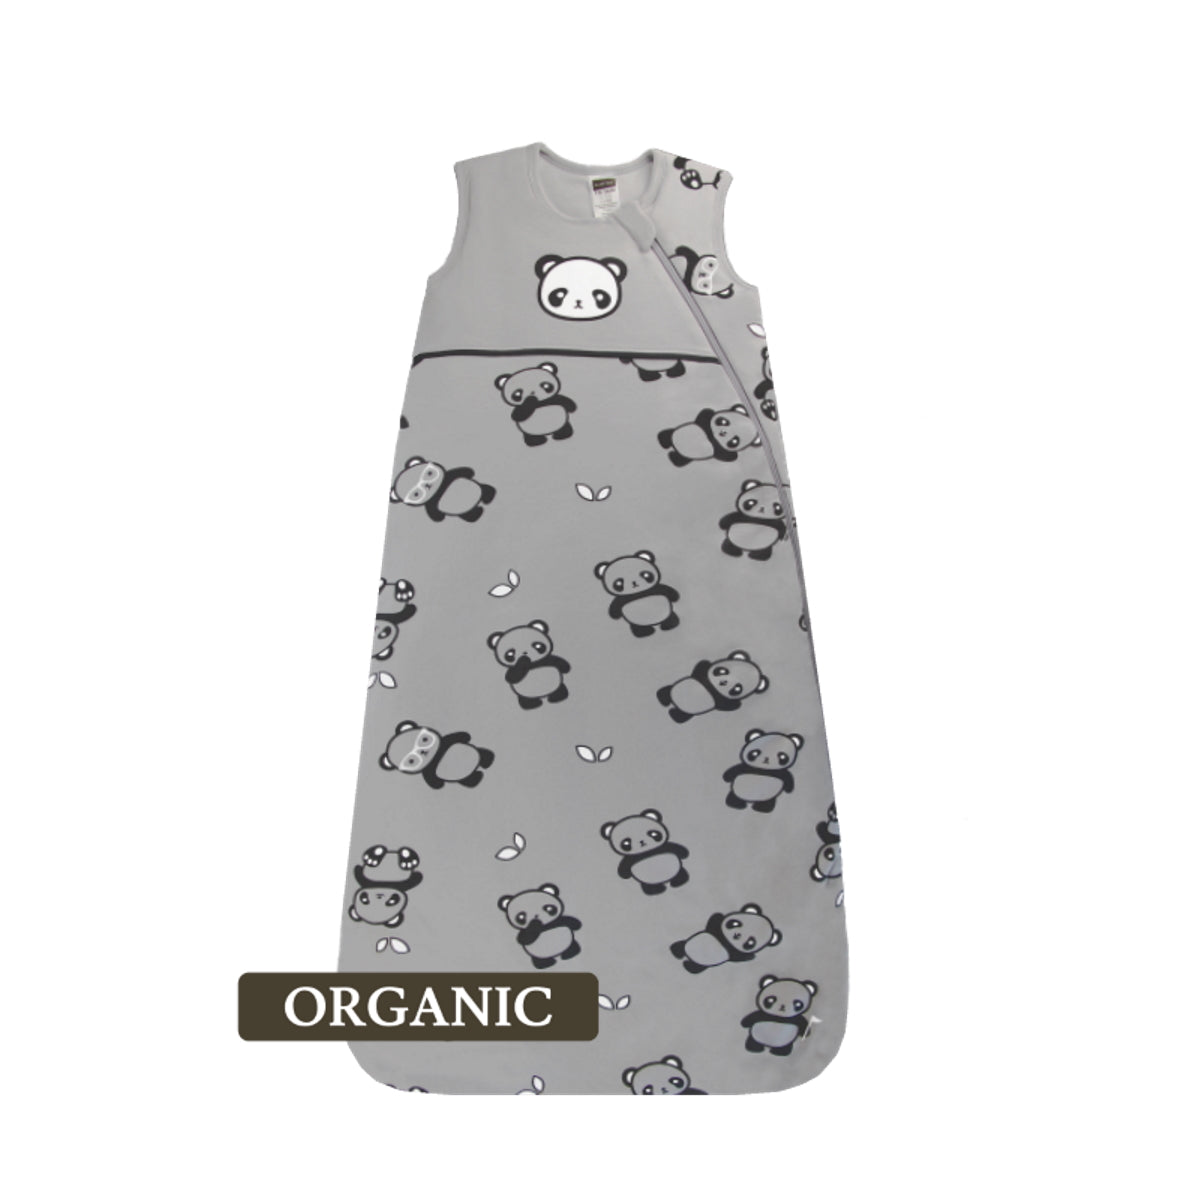 KUSHIES ORGANIC有機棉睡袋 初生0+ / 6-18個月 / 18-36個月適用 灰色熊貓